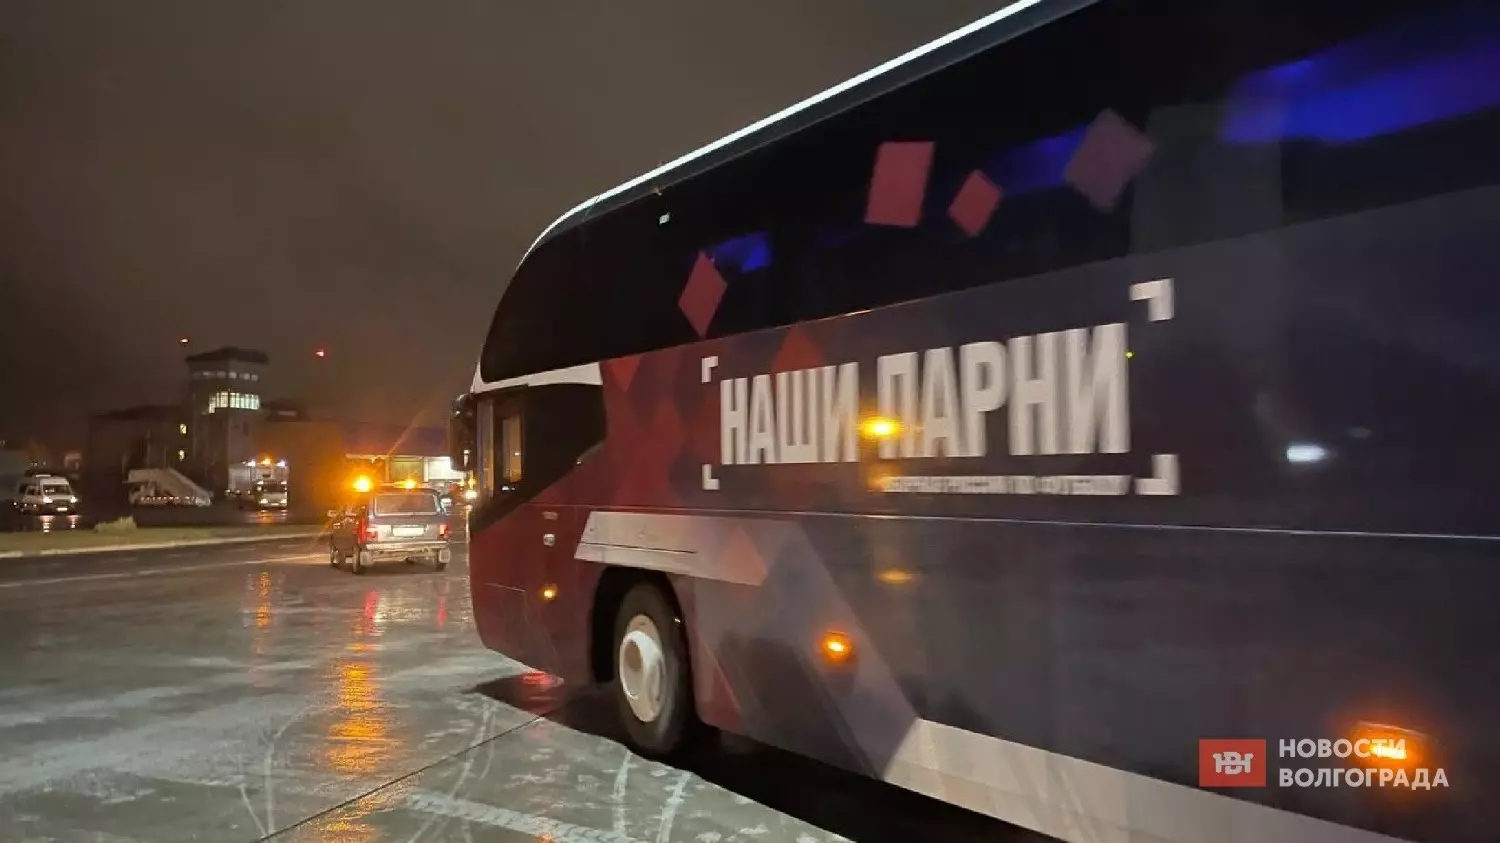 Автобус с символикой РФС подогнали прямо к трапу самолёта